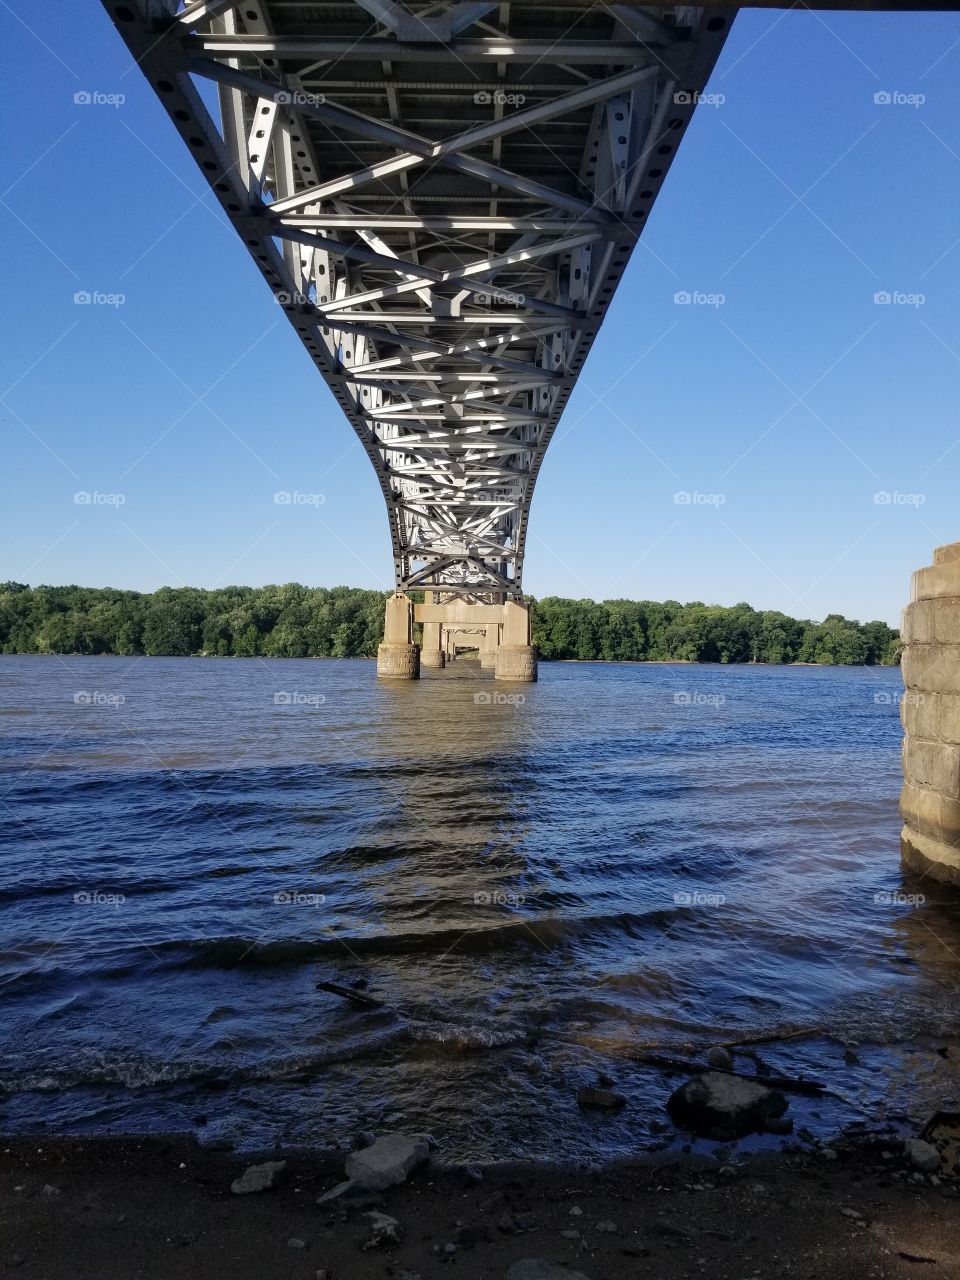 it's all water under the bridge